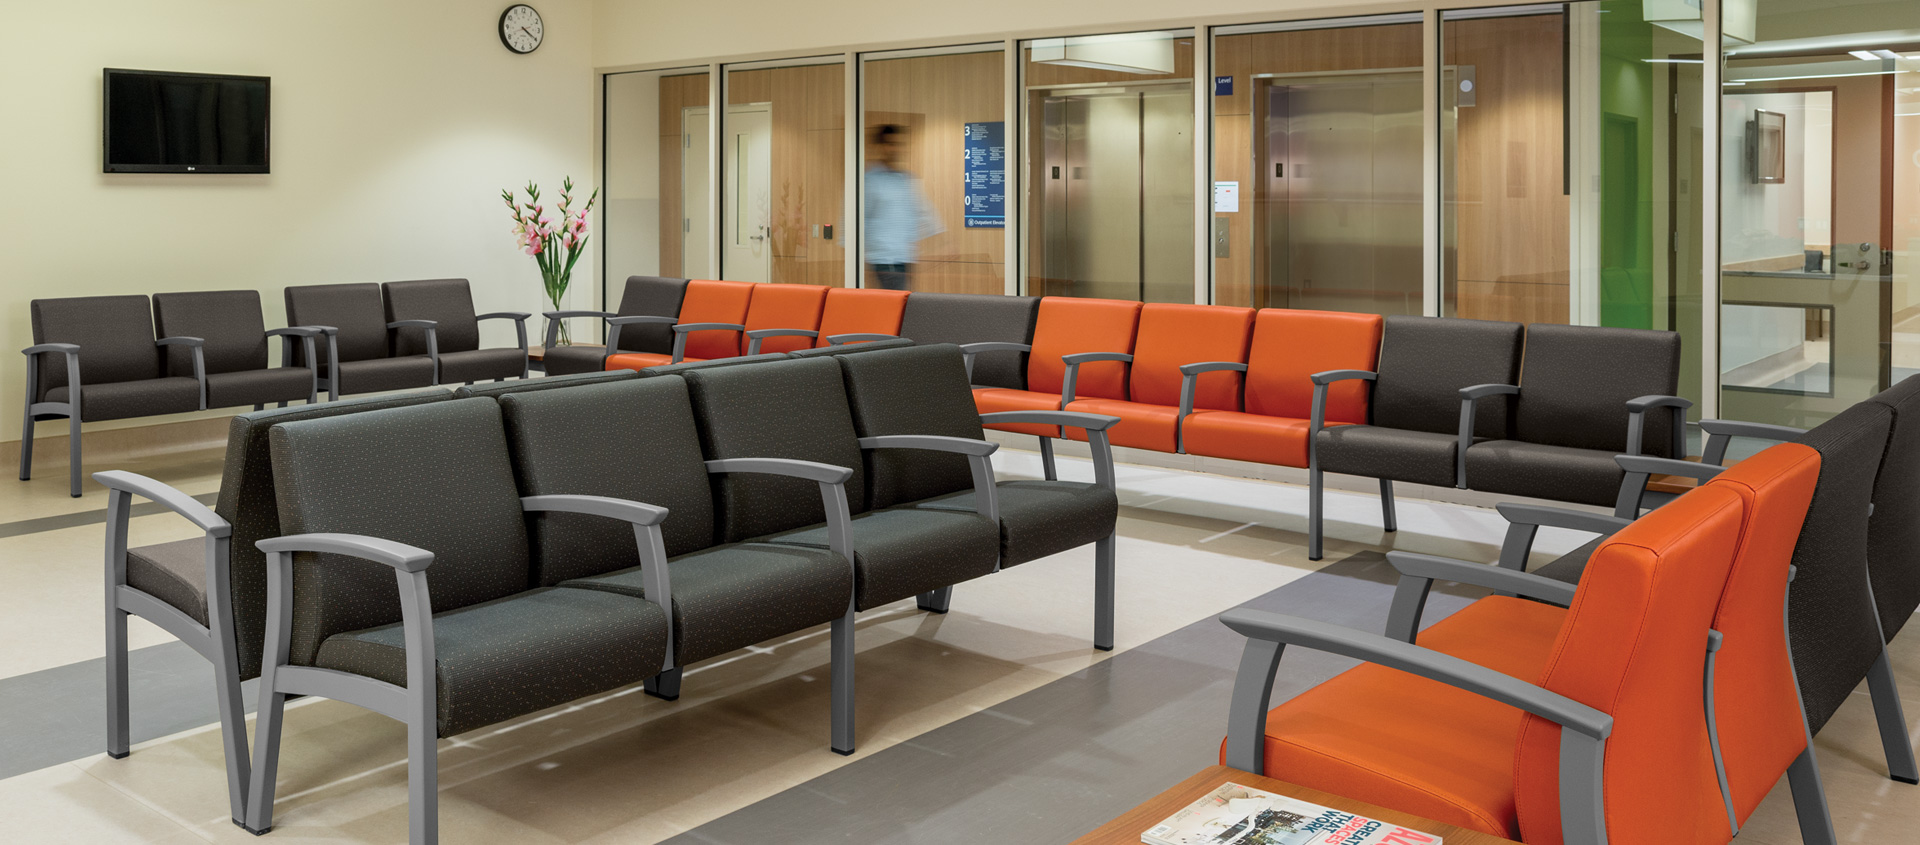 Image of hospital waiting room furniture